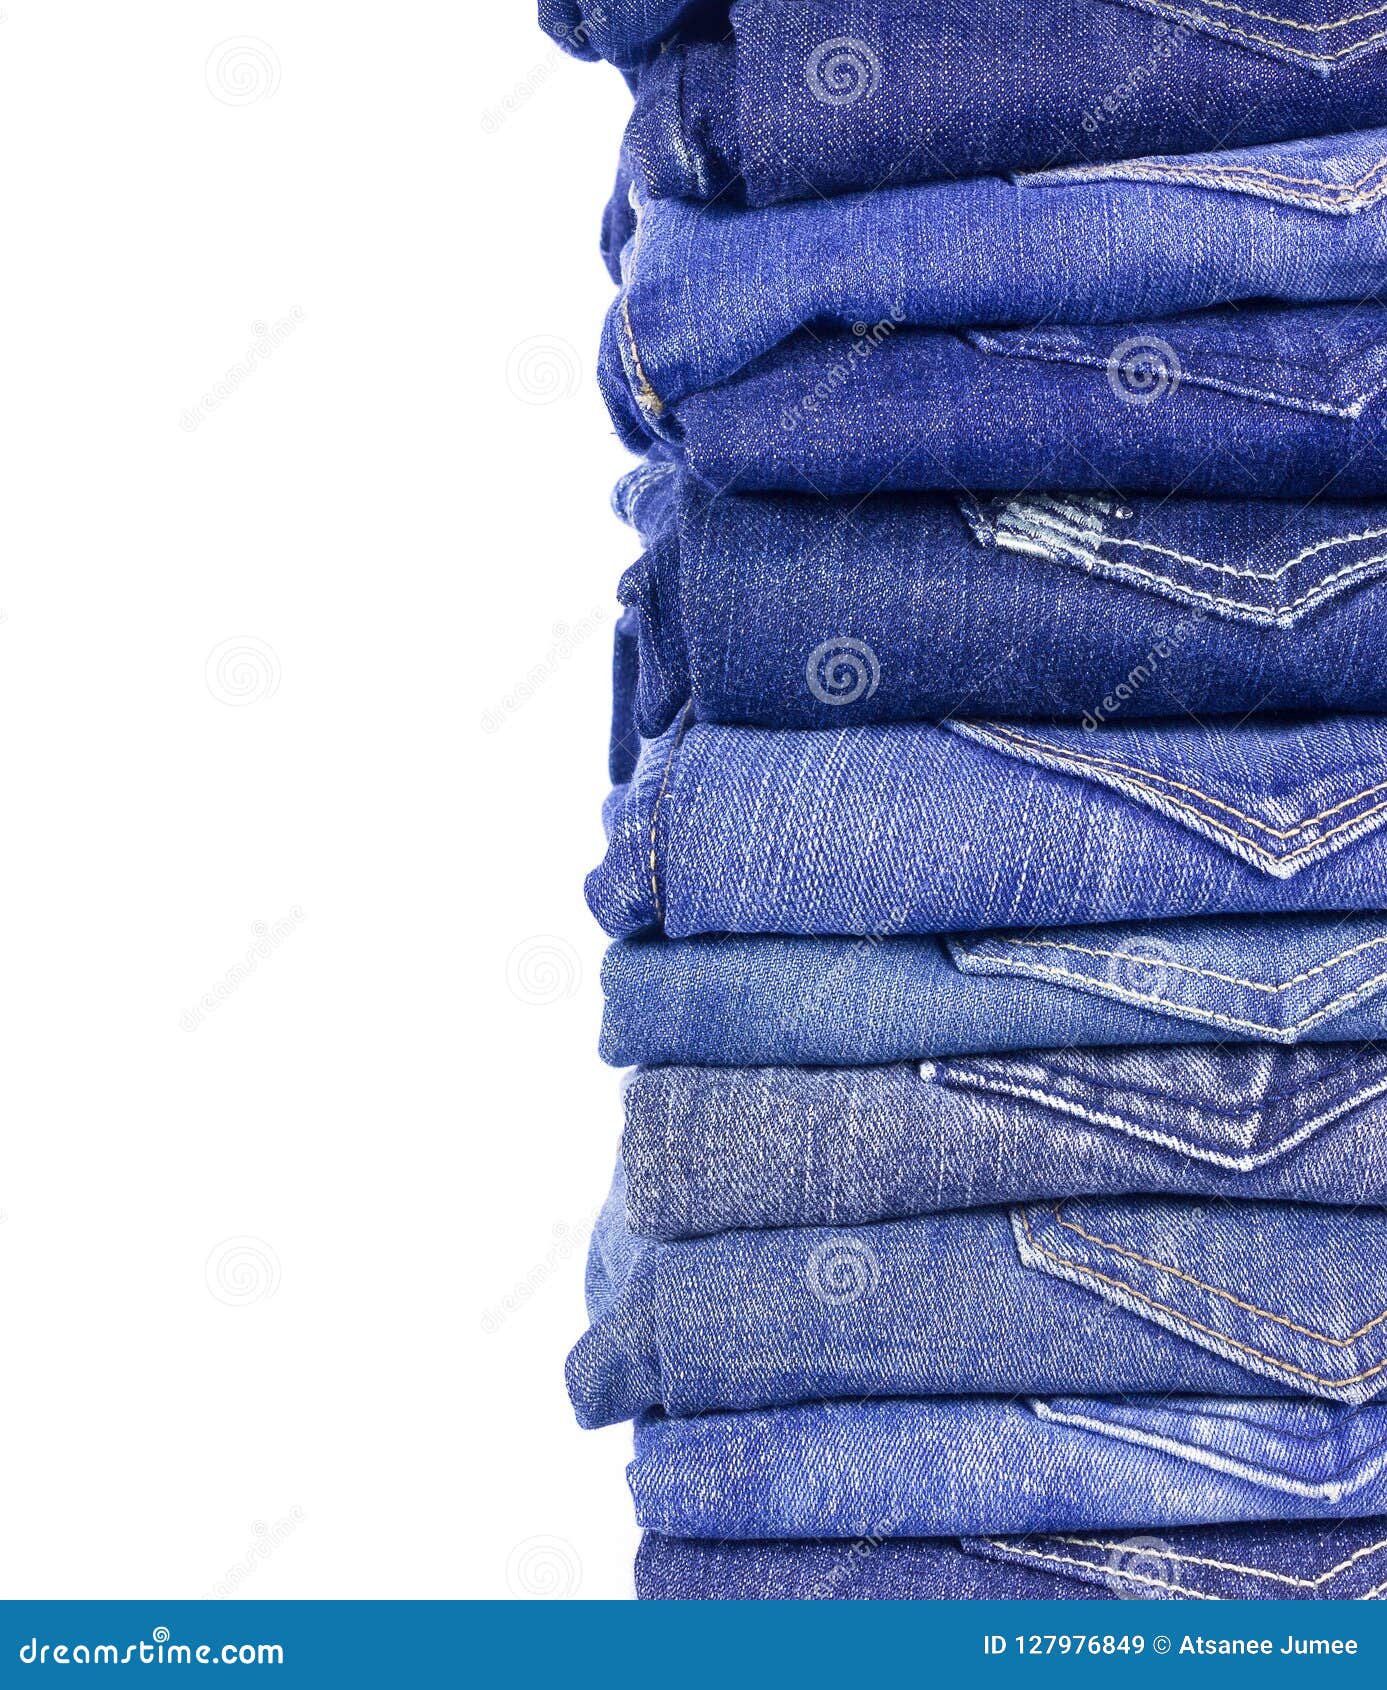 Jeans Denim Isolated on White Background. Stock Image - Image of pants ...